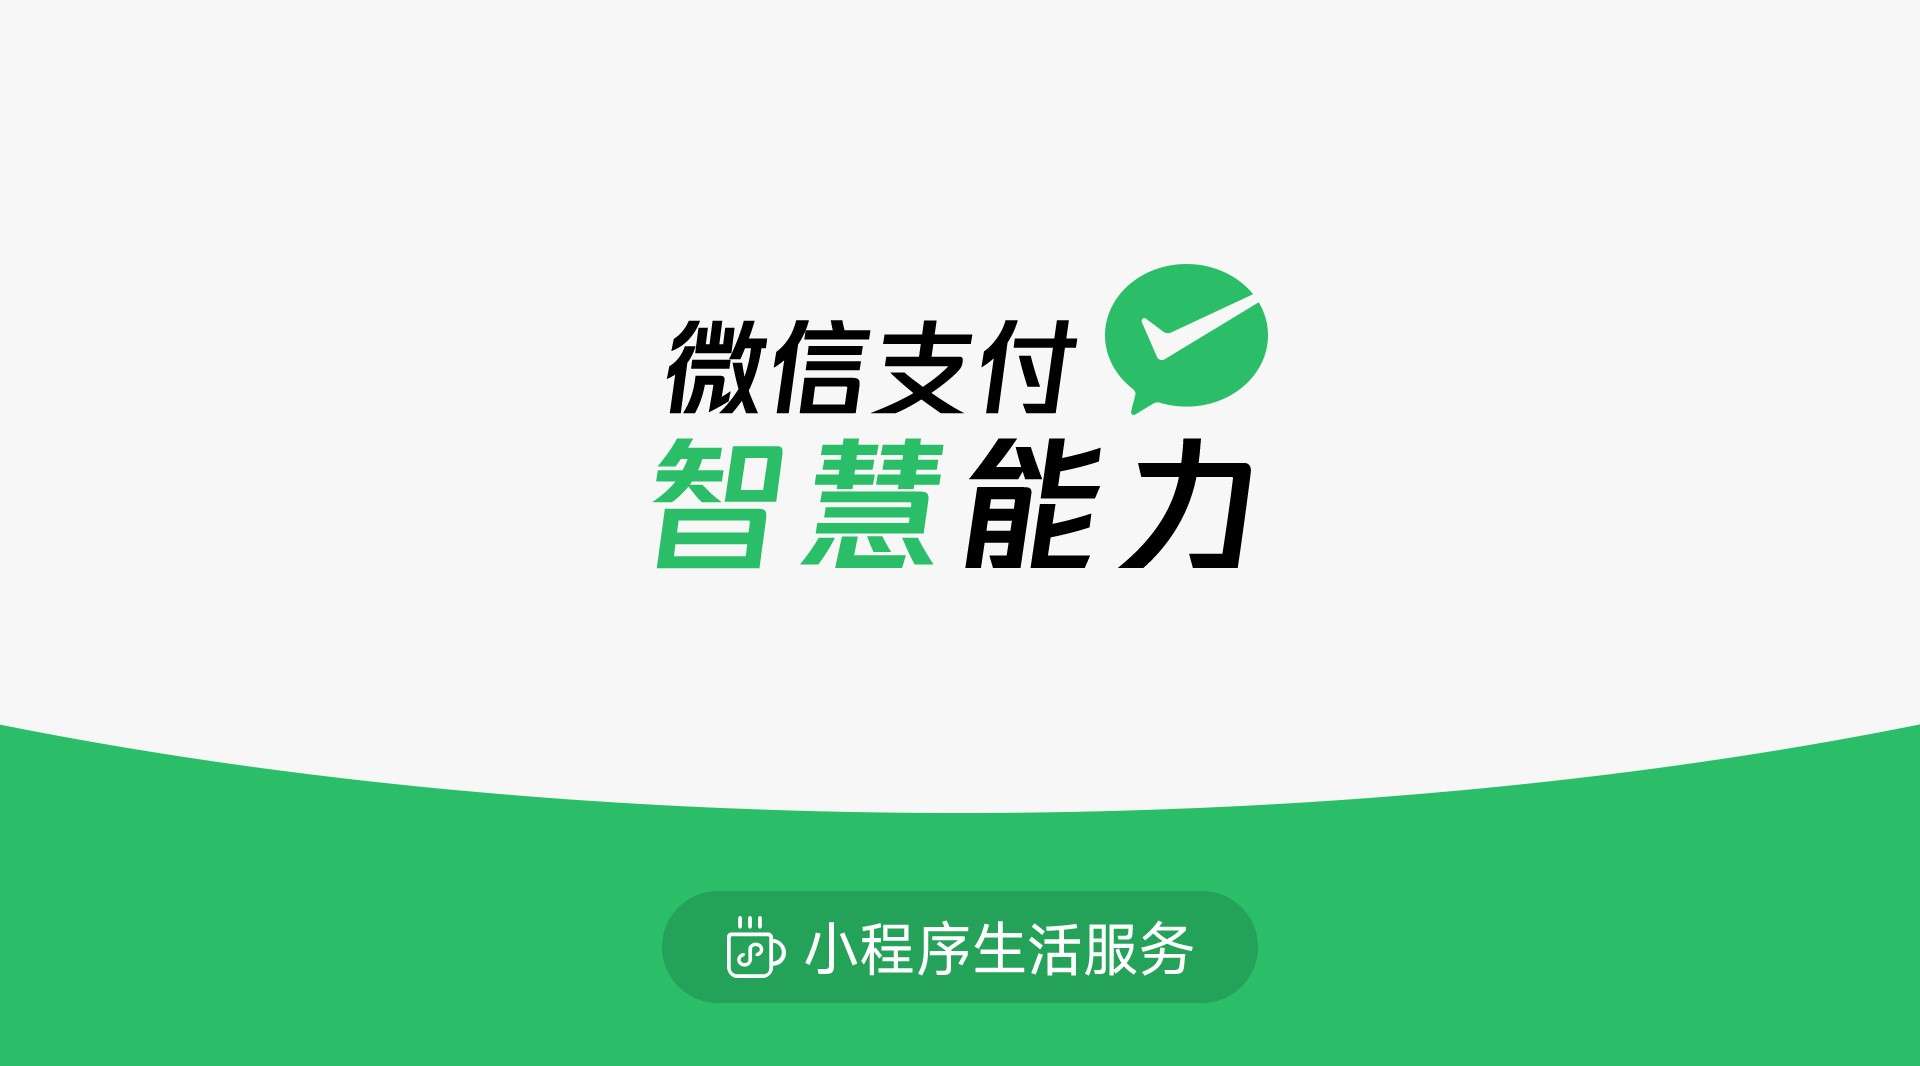 WeChat Pay 智慧能力-小程序生活服务